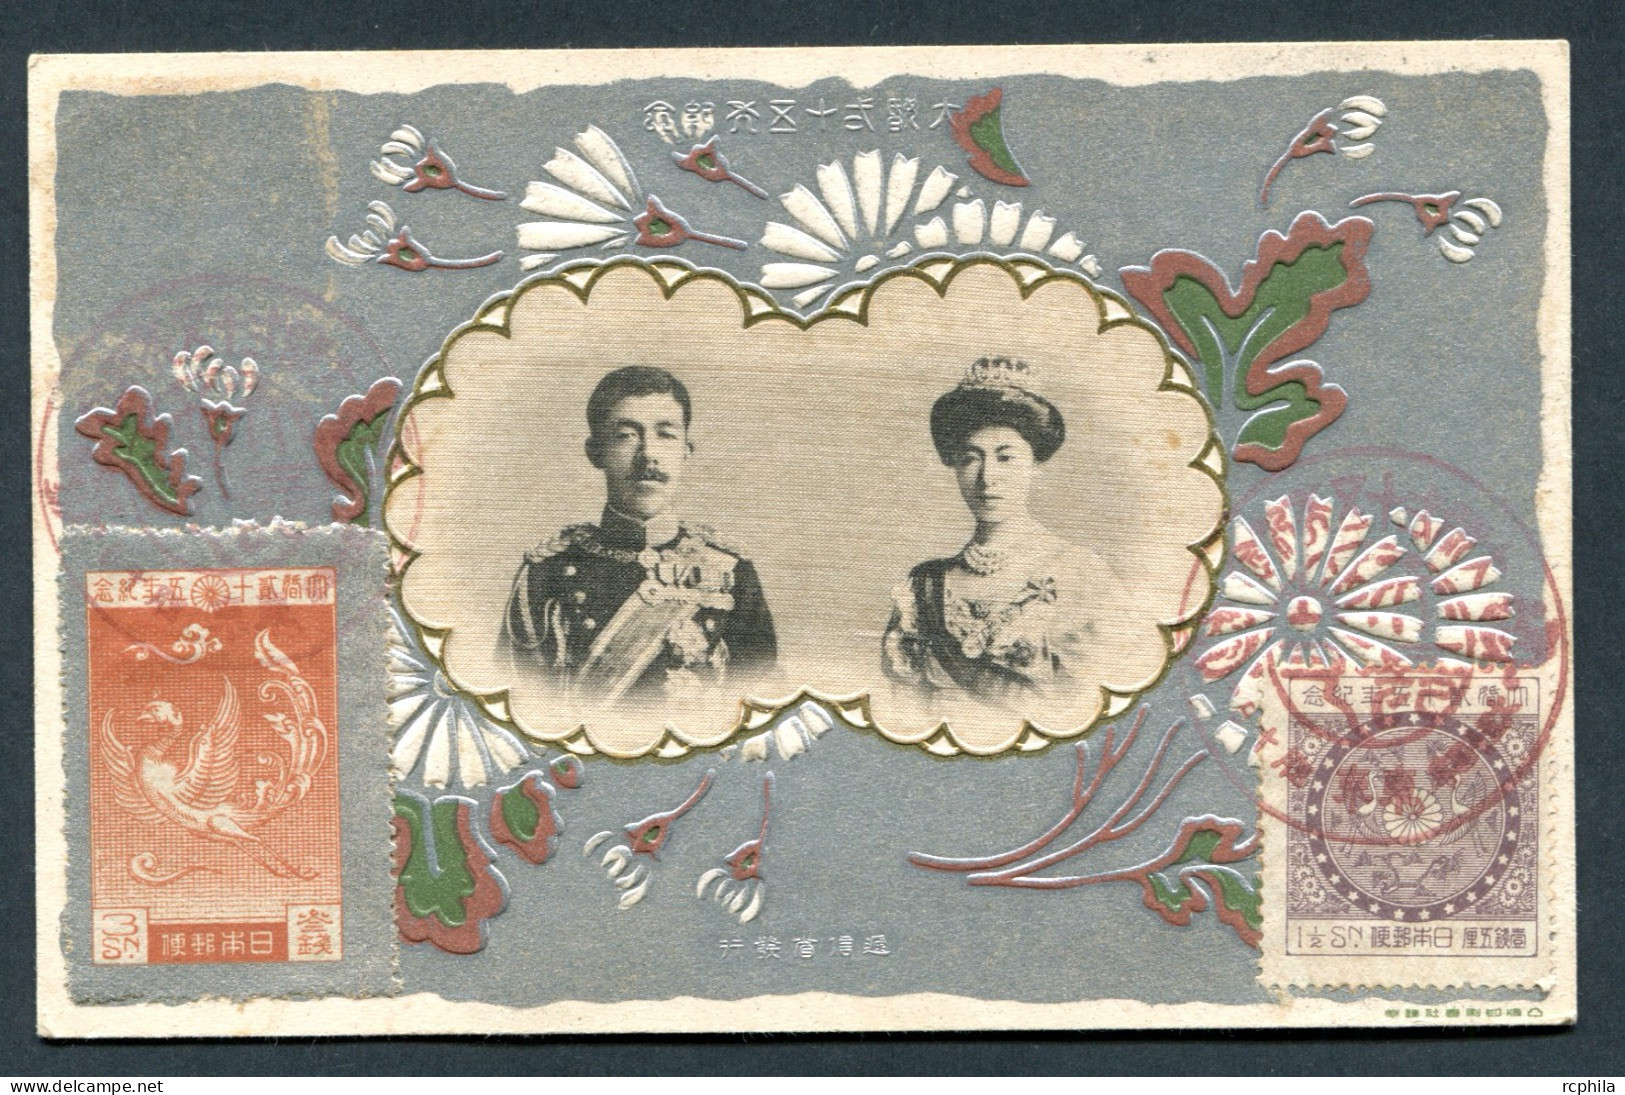 RC 26332 JAPON 1925 SILVER WEDDING RED COMMEMORATIVE POSTMARK FDC CARD VF - Briefe U. Dokumente